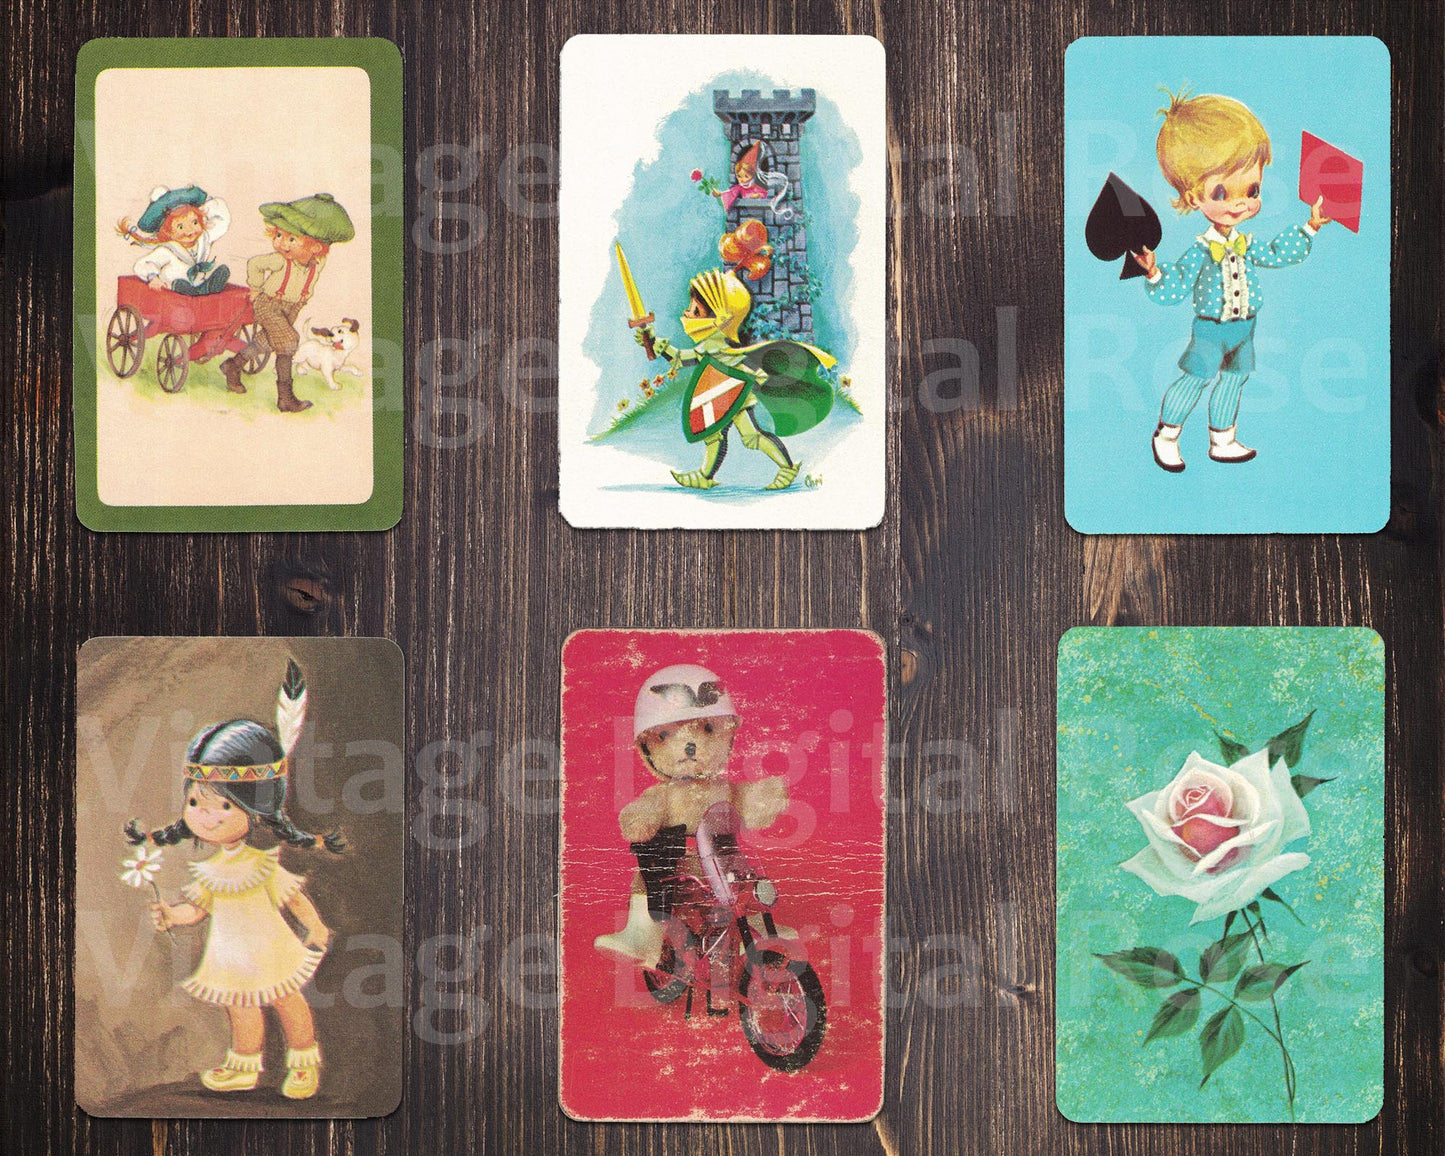 Vintage Printable Junior Size Playing Cards Card Backs Kids Dogs Birds Teddy Bears Digital Collage Sheet PNG Format Set of 12 Cards